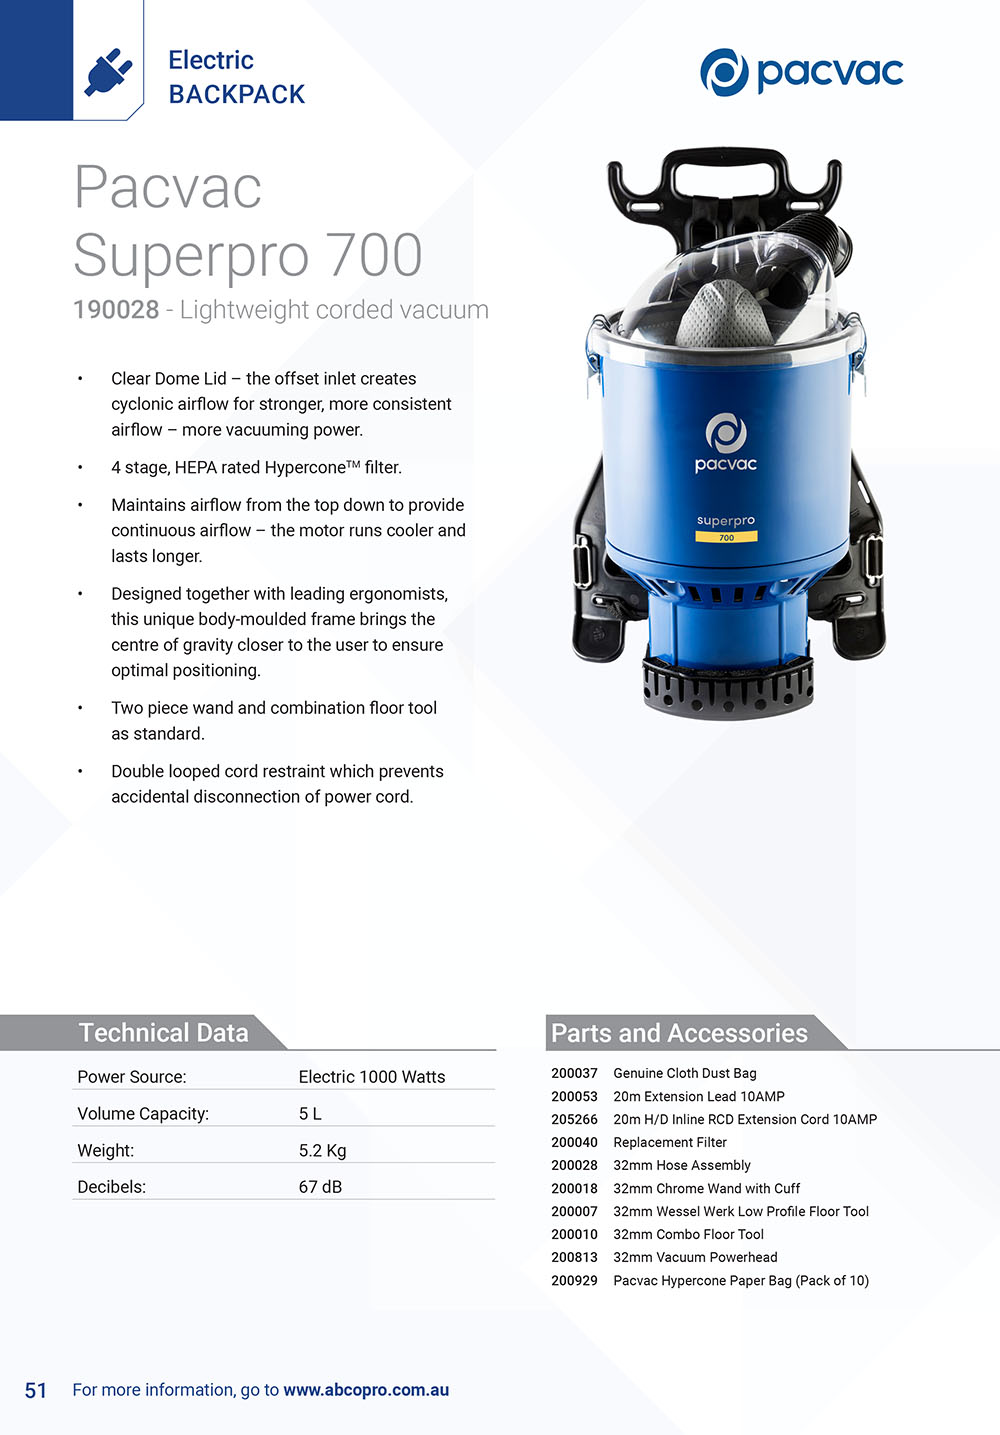 Abco machinery catalogue - Pacvac Superpro 700